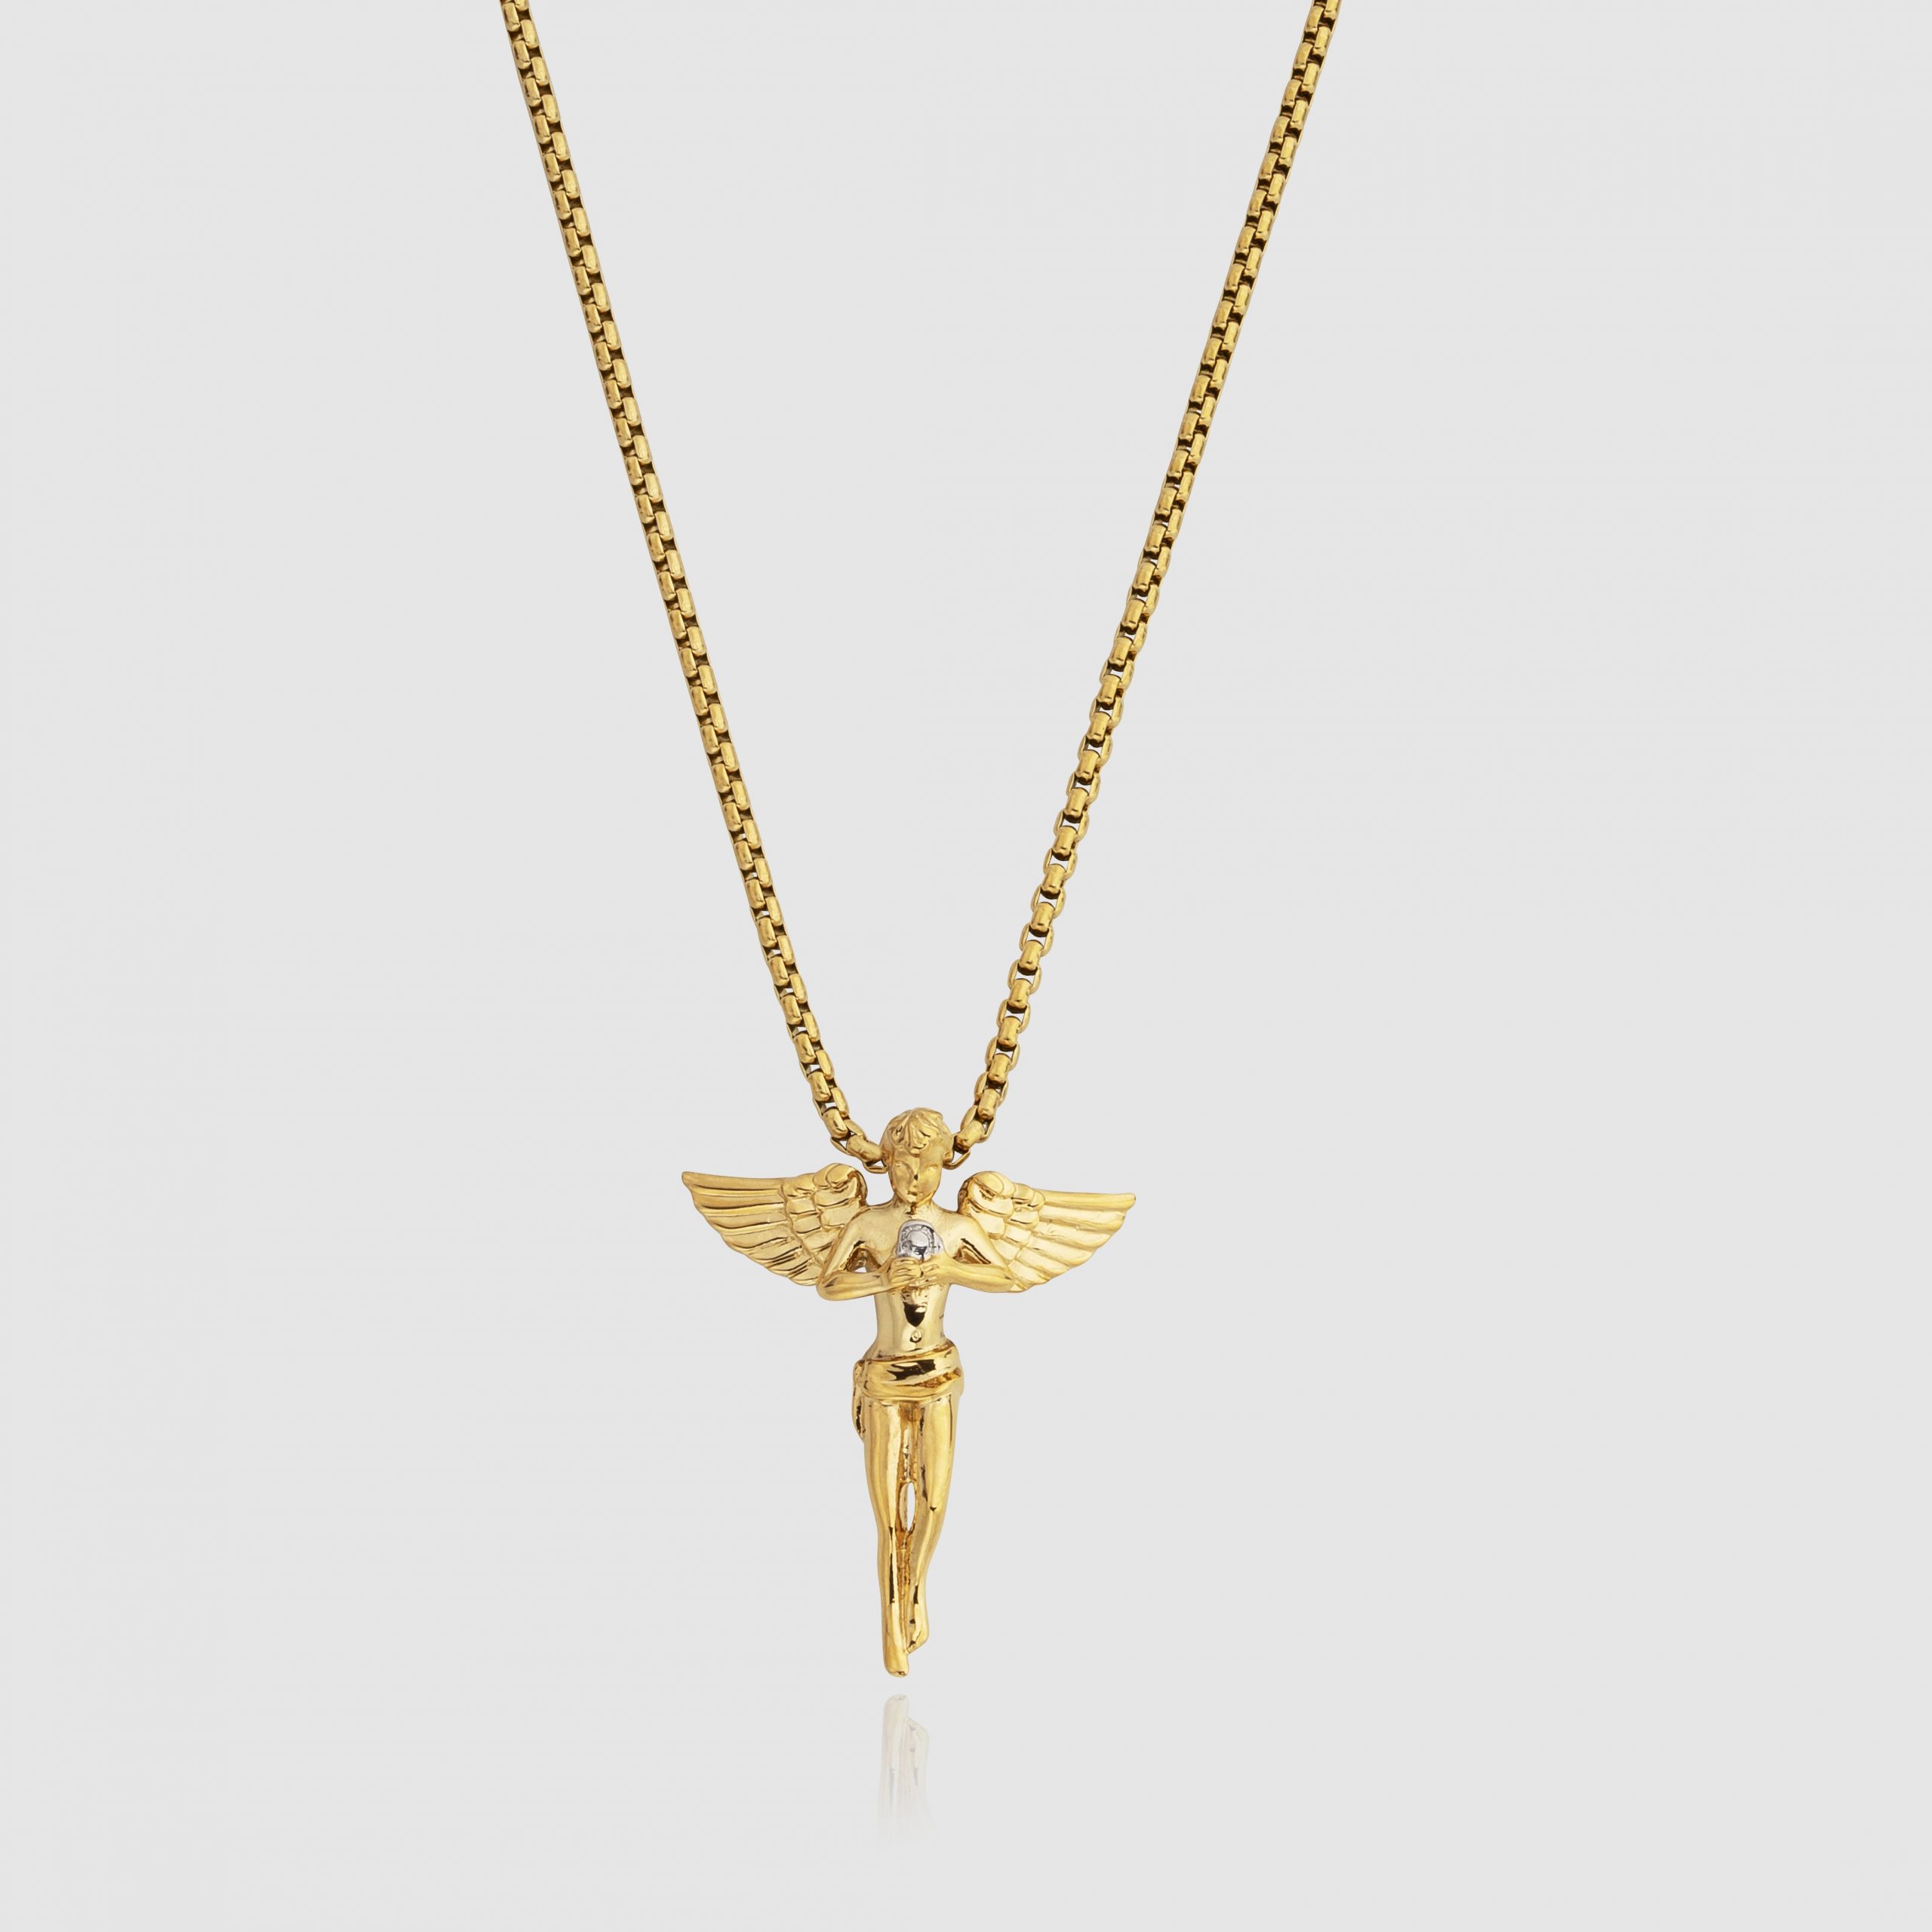 CRAFTD London Angel Gold Pendant Necklace